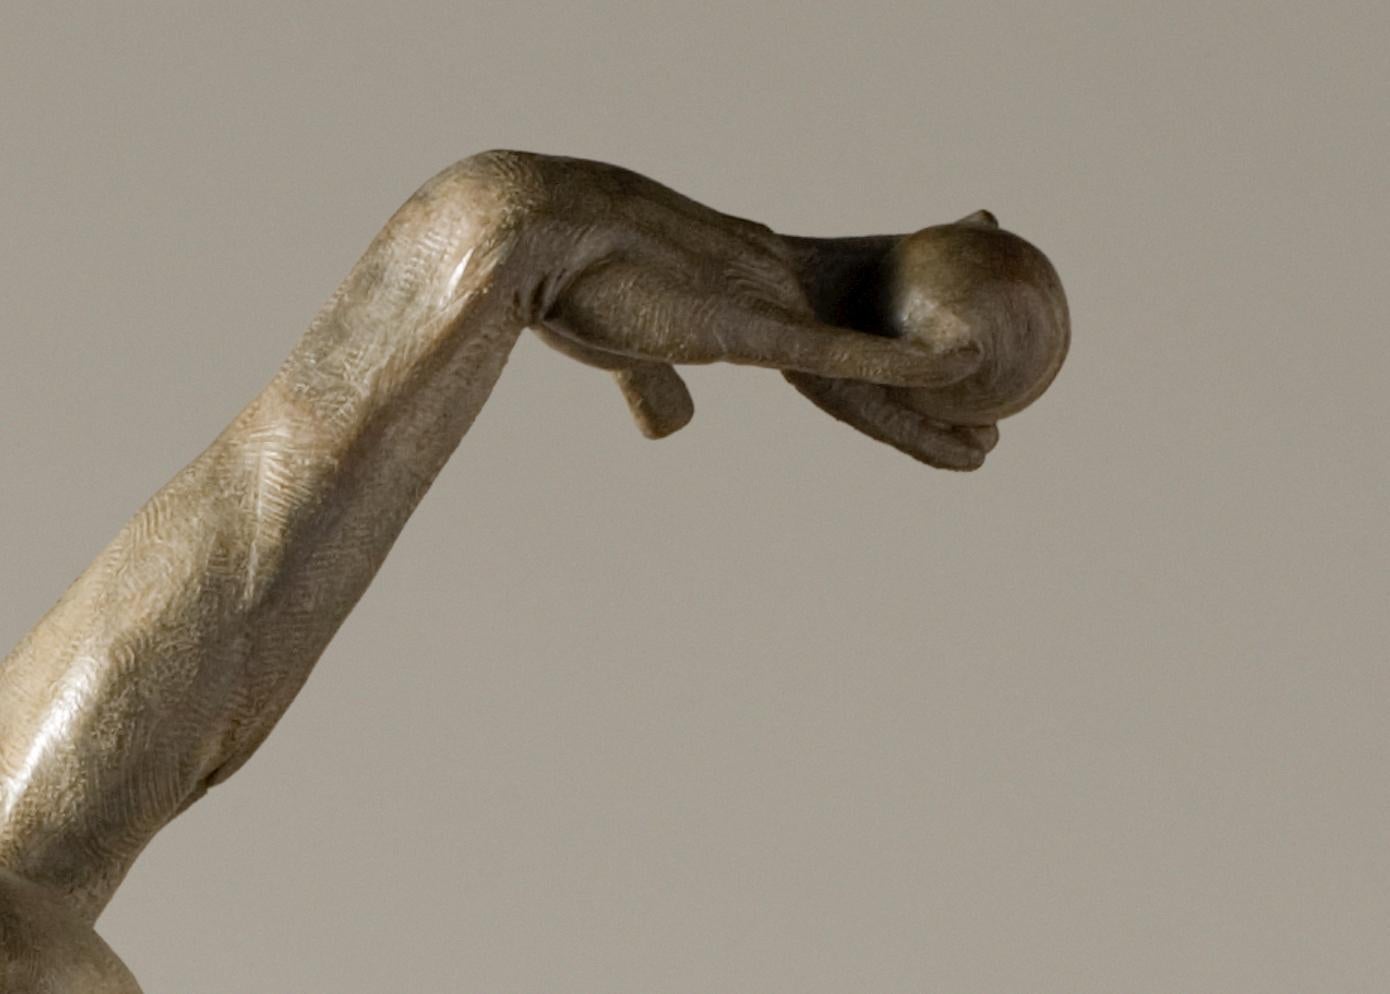 Leap of Faith, Atelier - Contemporary Sculpture by Richard MacDonald